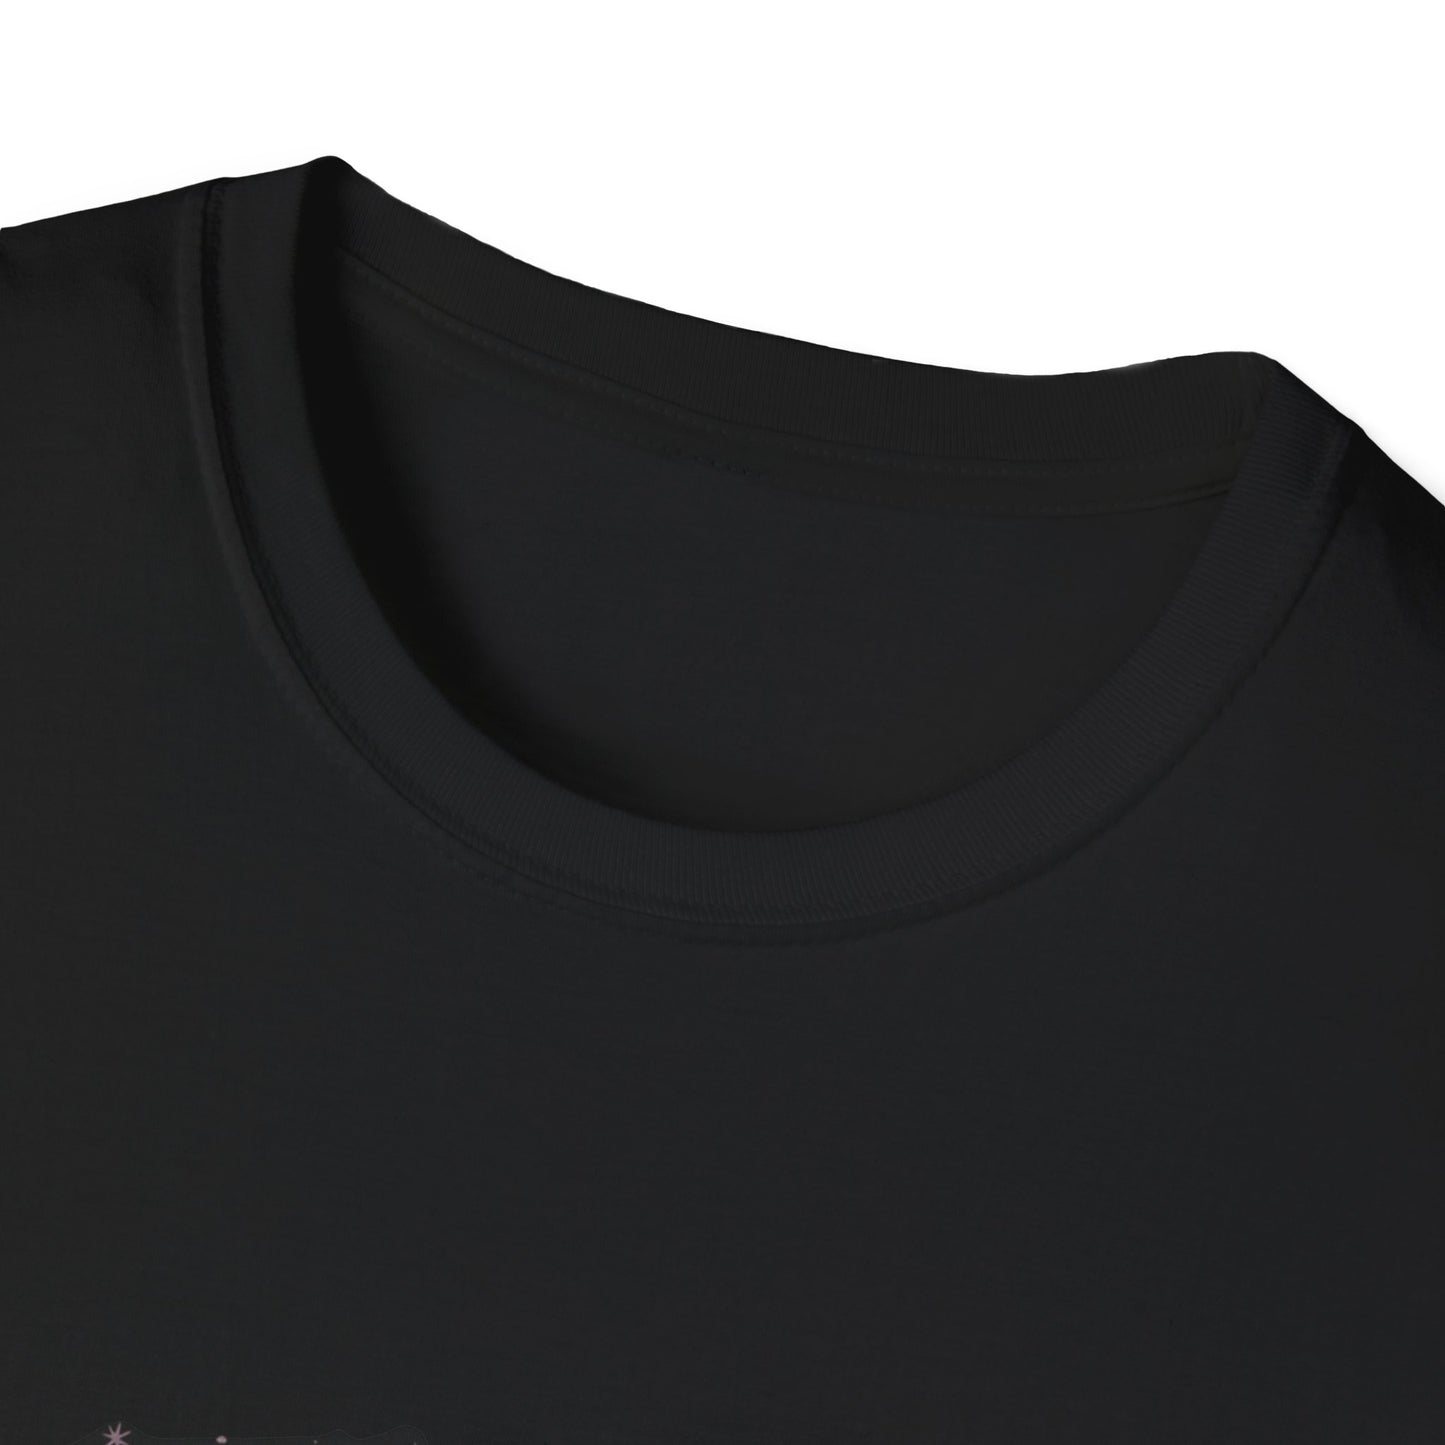 Cosmic Aurora Erie Eclipse Emblem T-Shirt, Unisex Softstyle, Fashionable Graphic Tee, Trendy Design